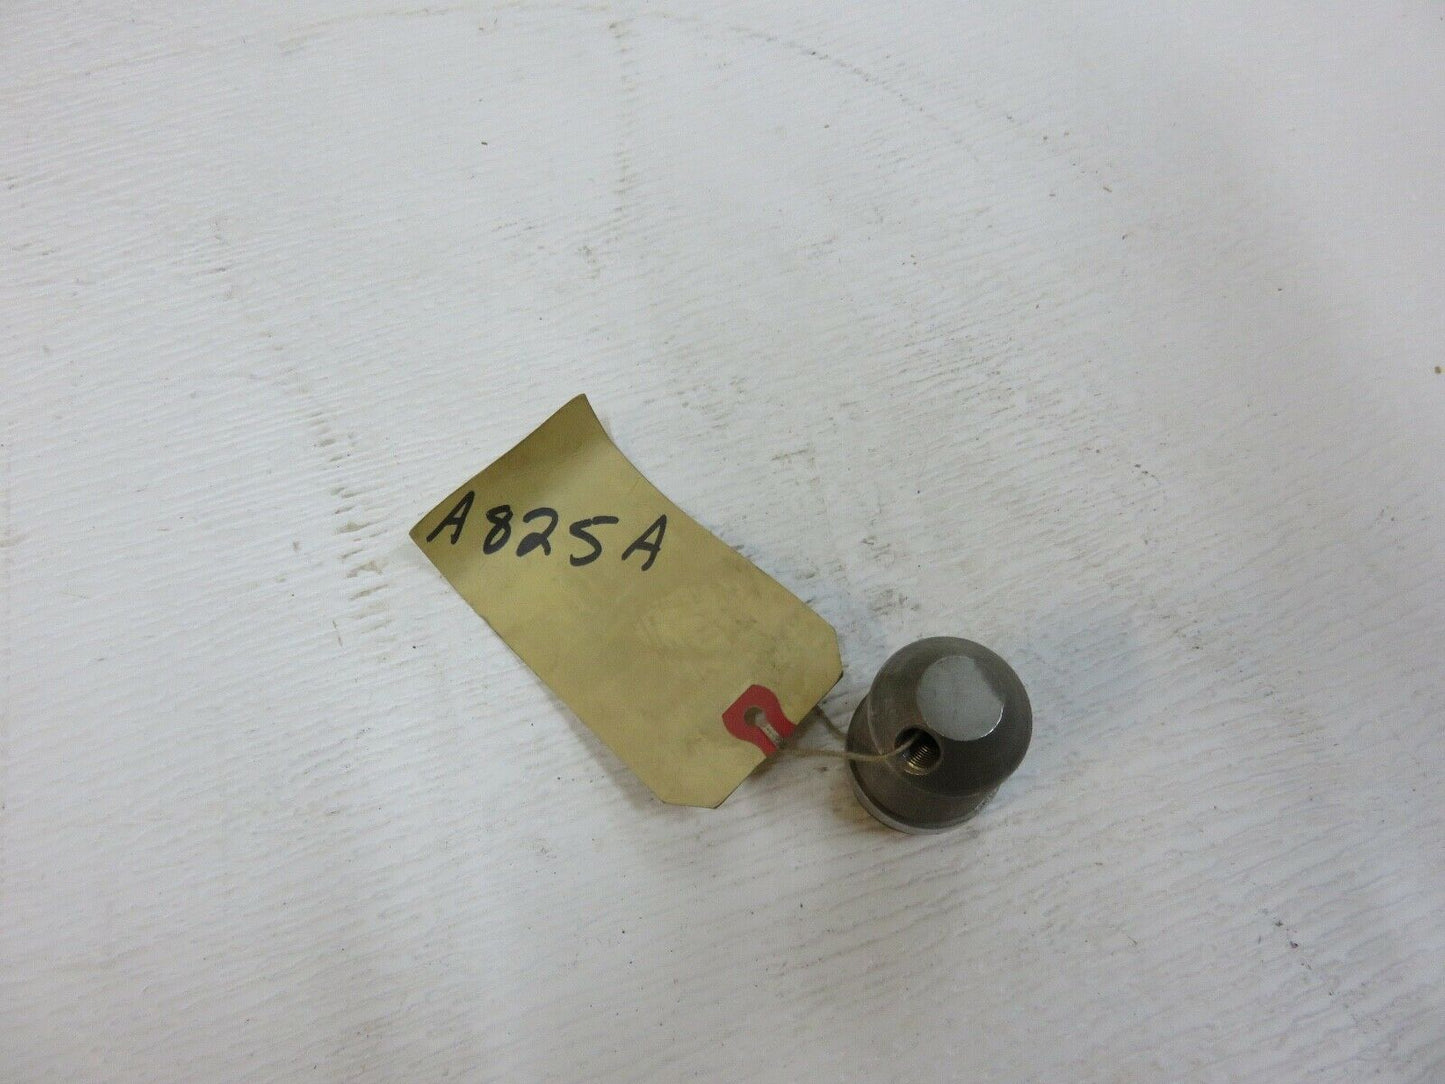 A825A 51063 John Deere Gearmatic NOS Cylinder For Model 19 Winch